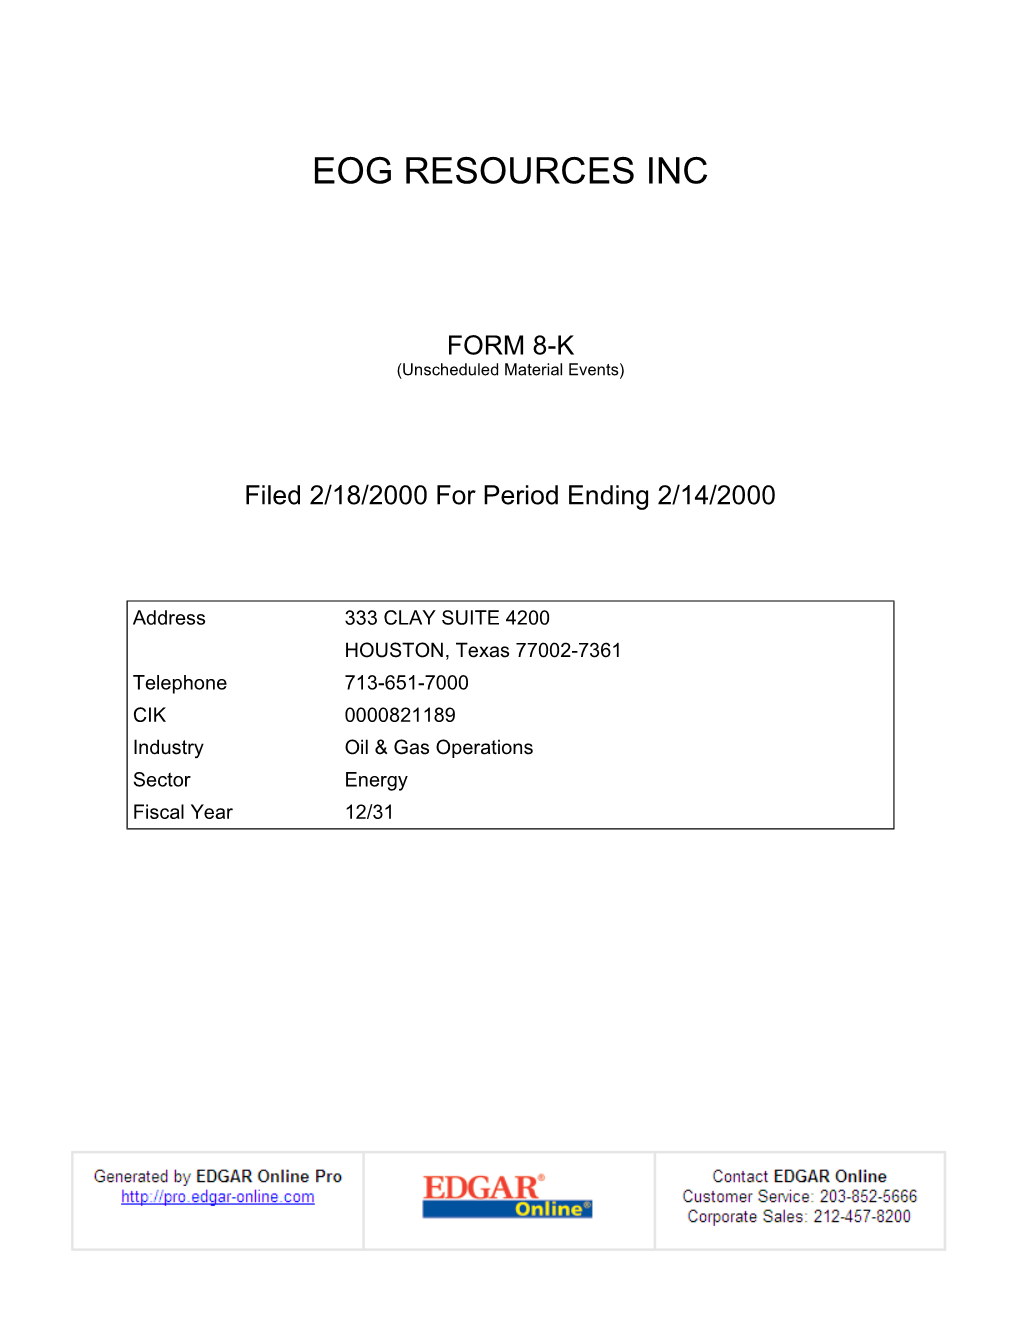 Eog Resources Inc